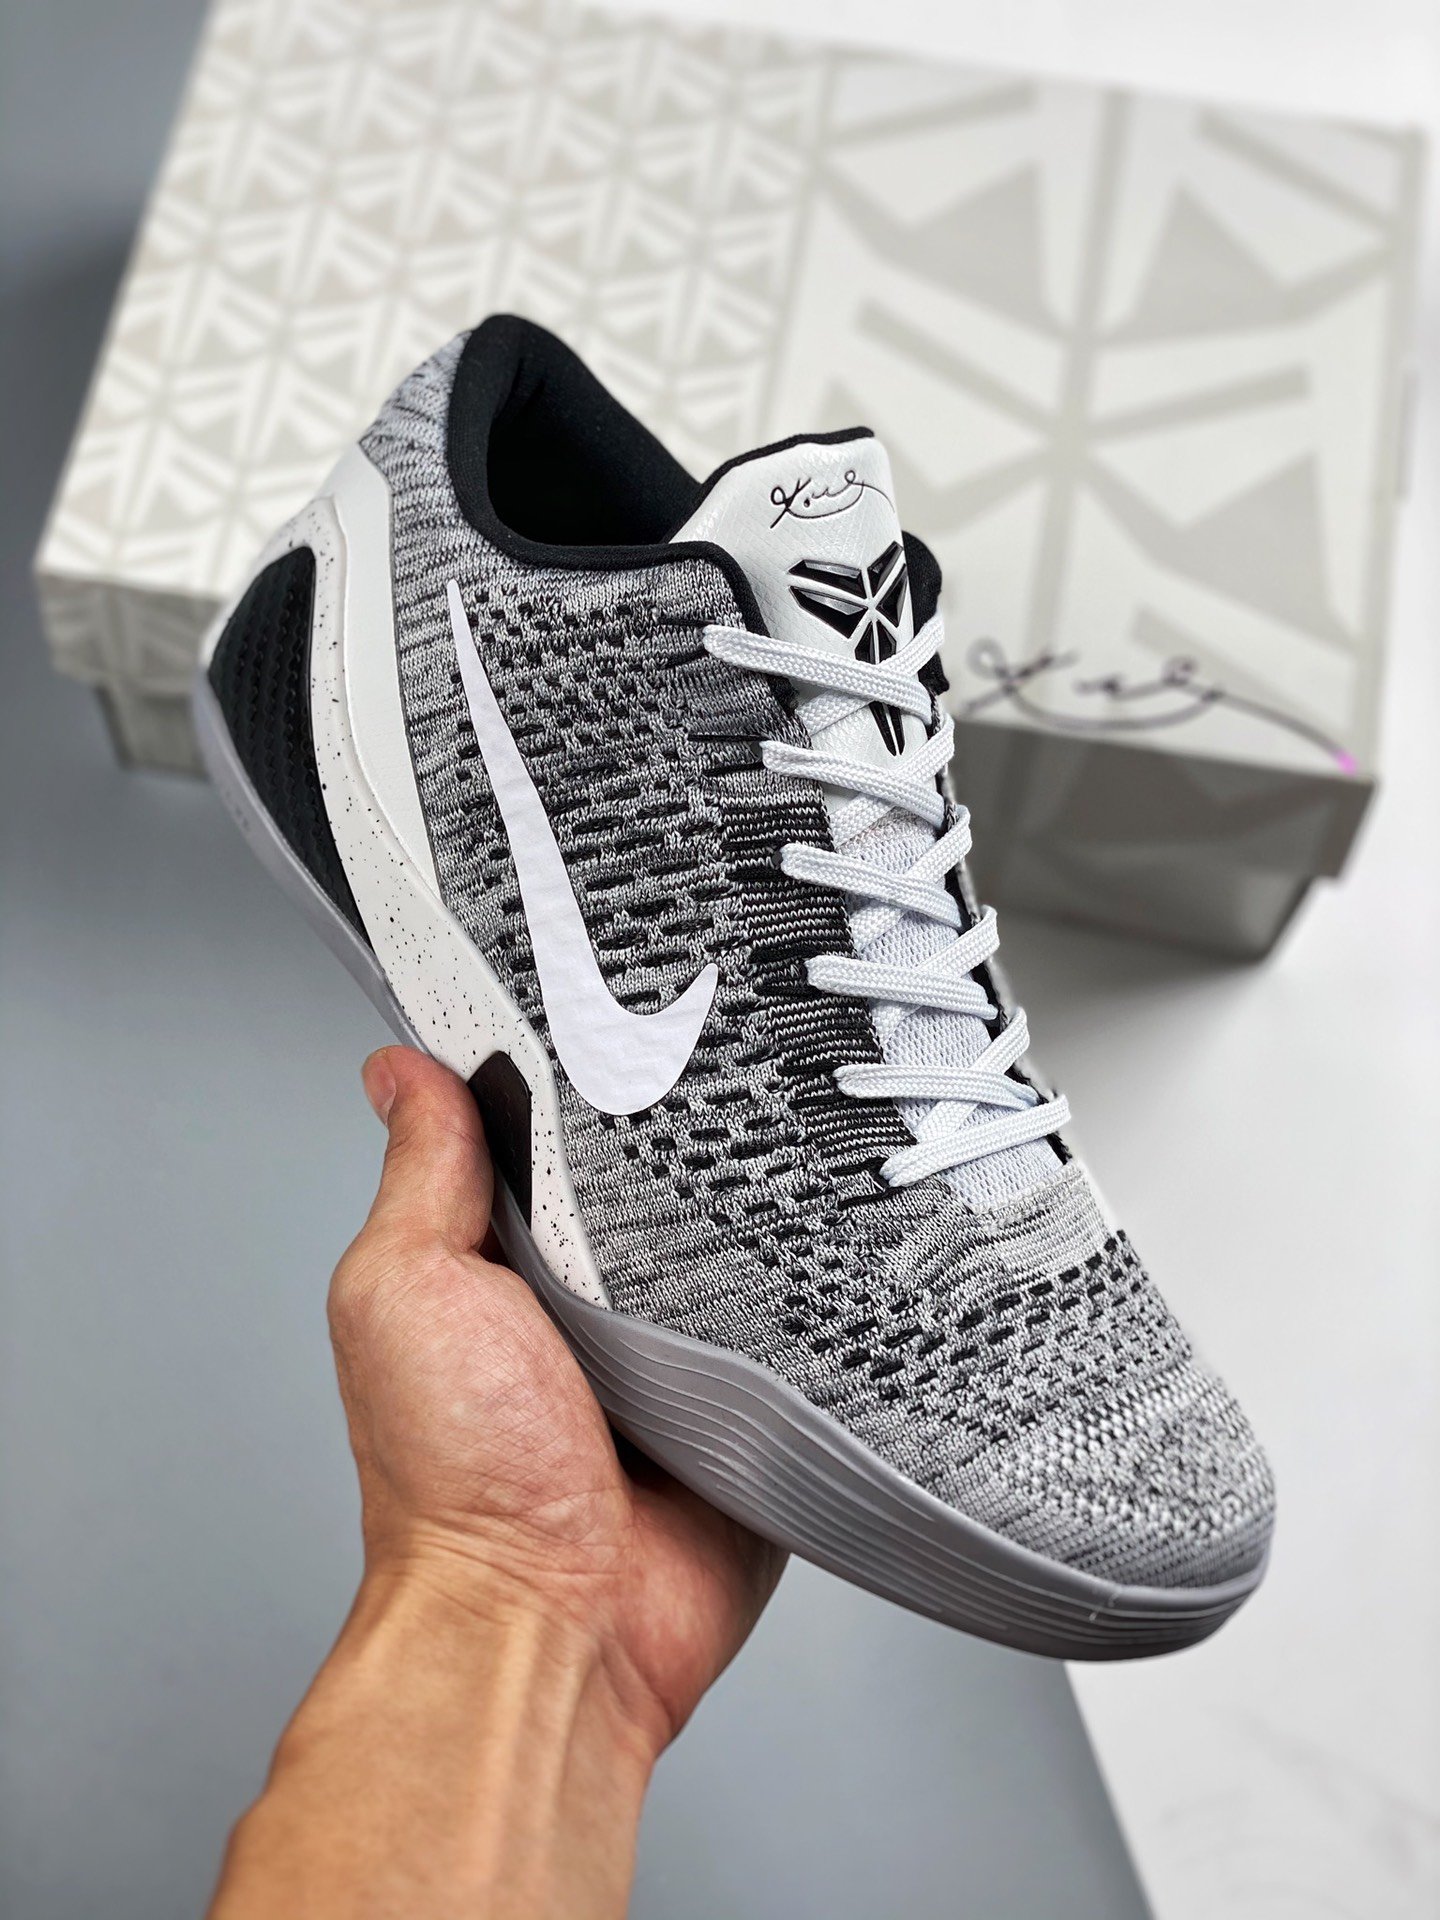 Nike Kobe 9 Elite Low "Beethoven" White/Black-Wolf Grey Shoes